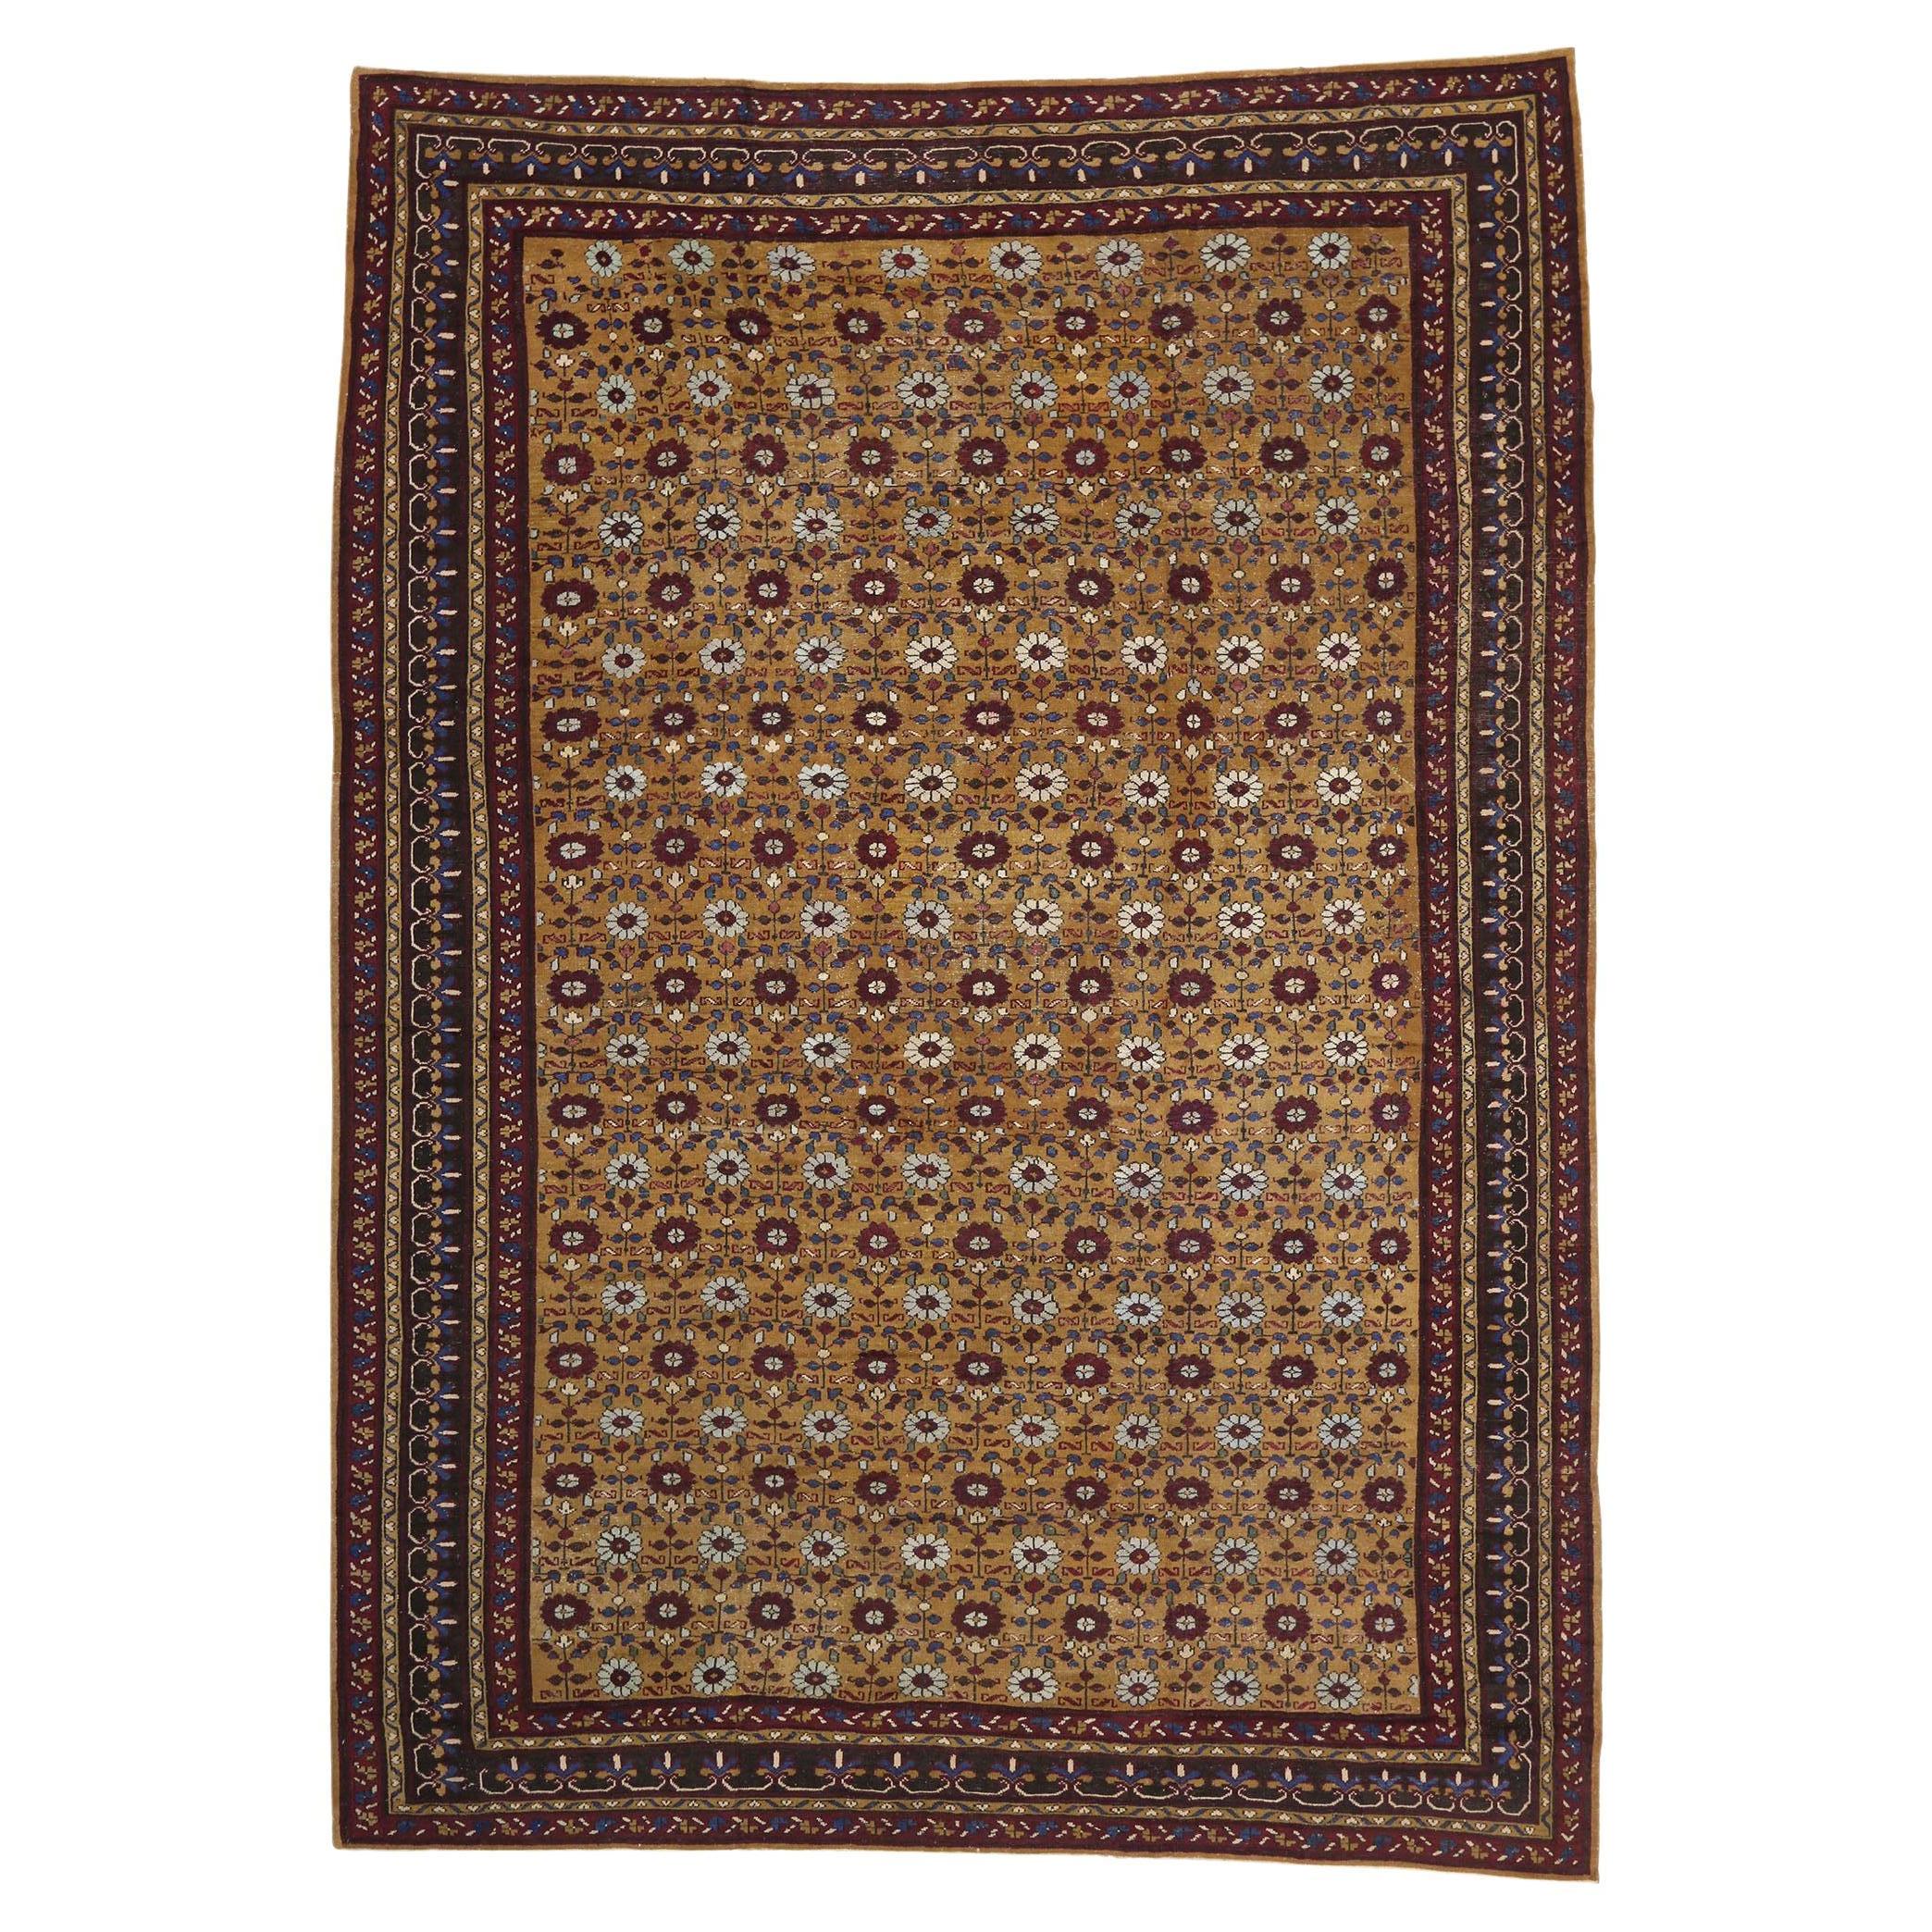 Late 19th Century Antique Indian Agra Carpet, 12'00 x 16'09